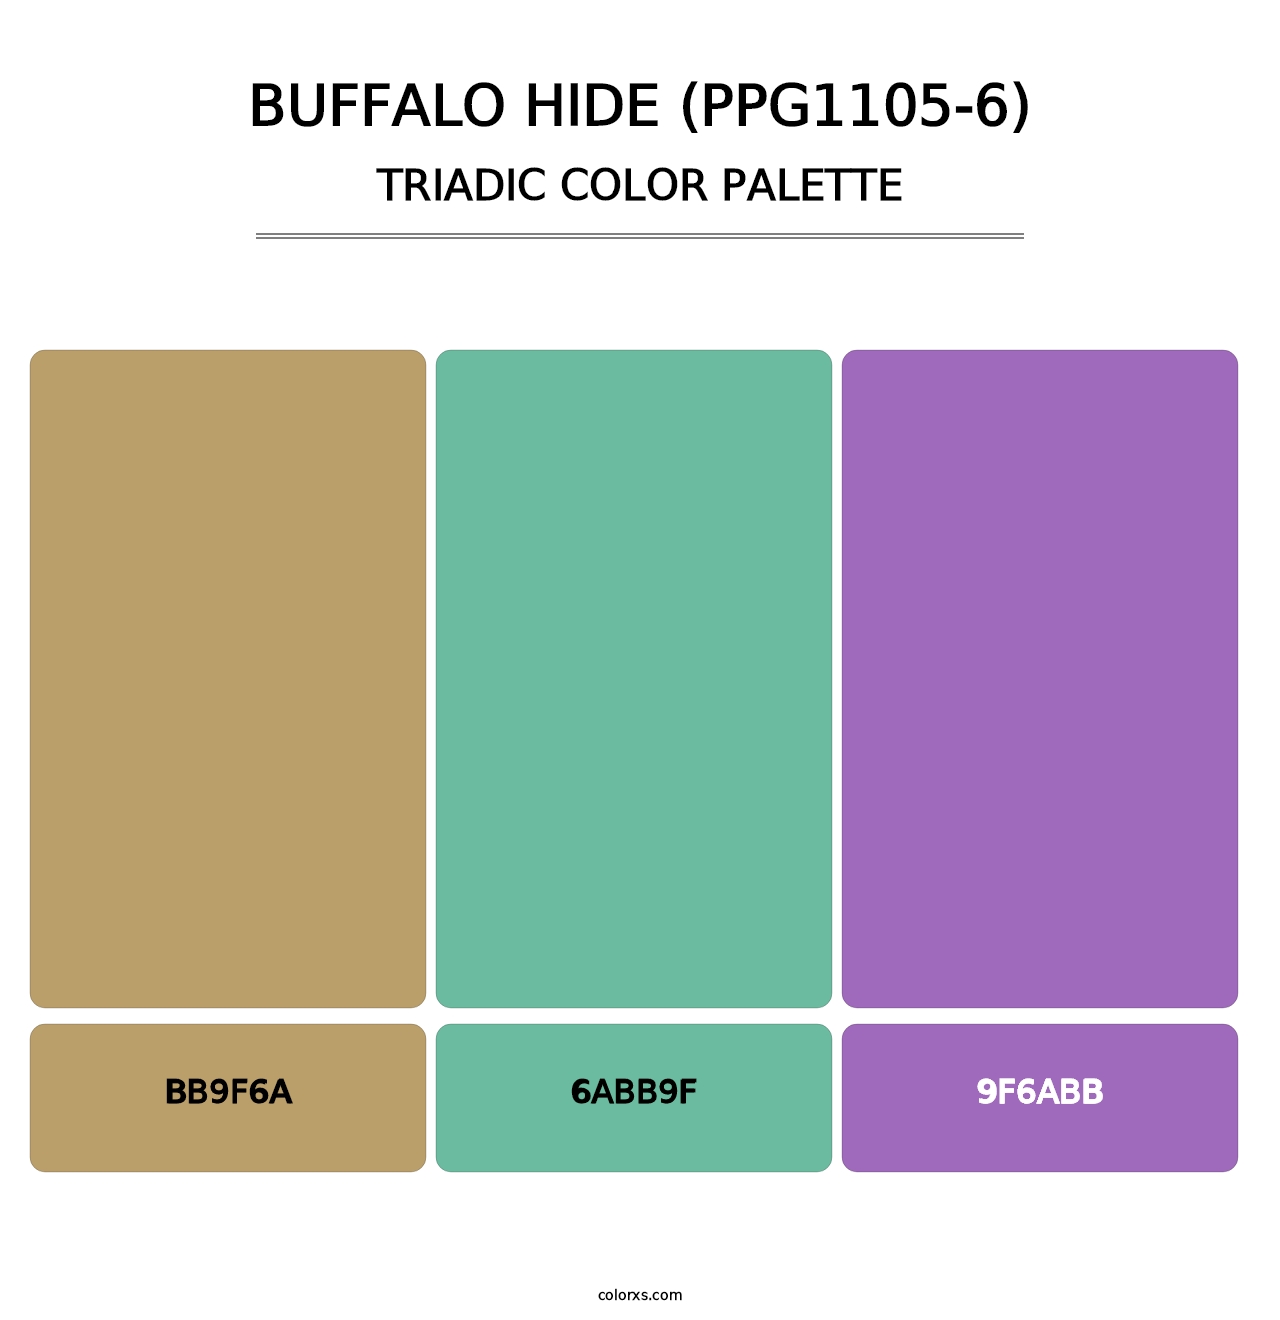 Buffalo Hide (PPG1105-6) - Triadic Color Palette